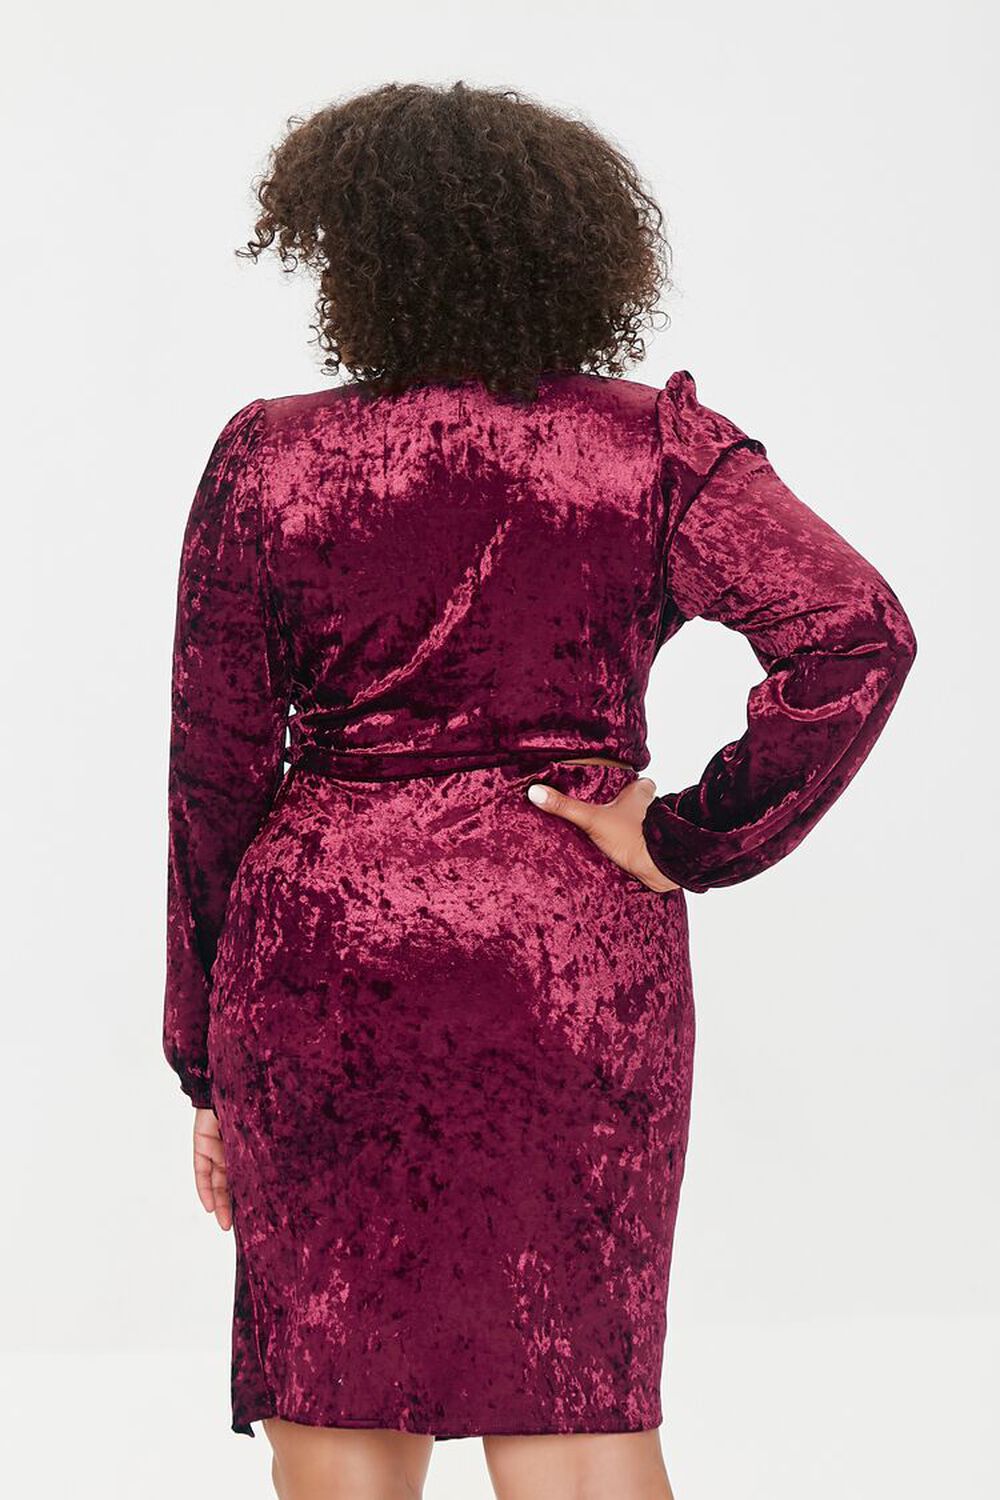 WINE Plus Size Velvet Crop Top & Skirt Set, image 3